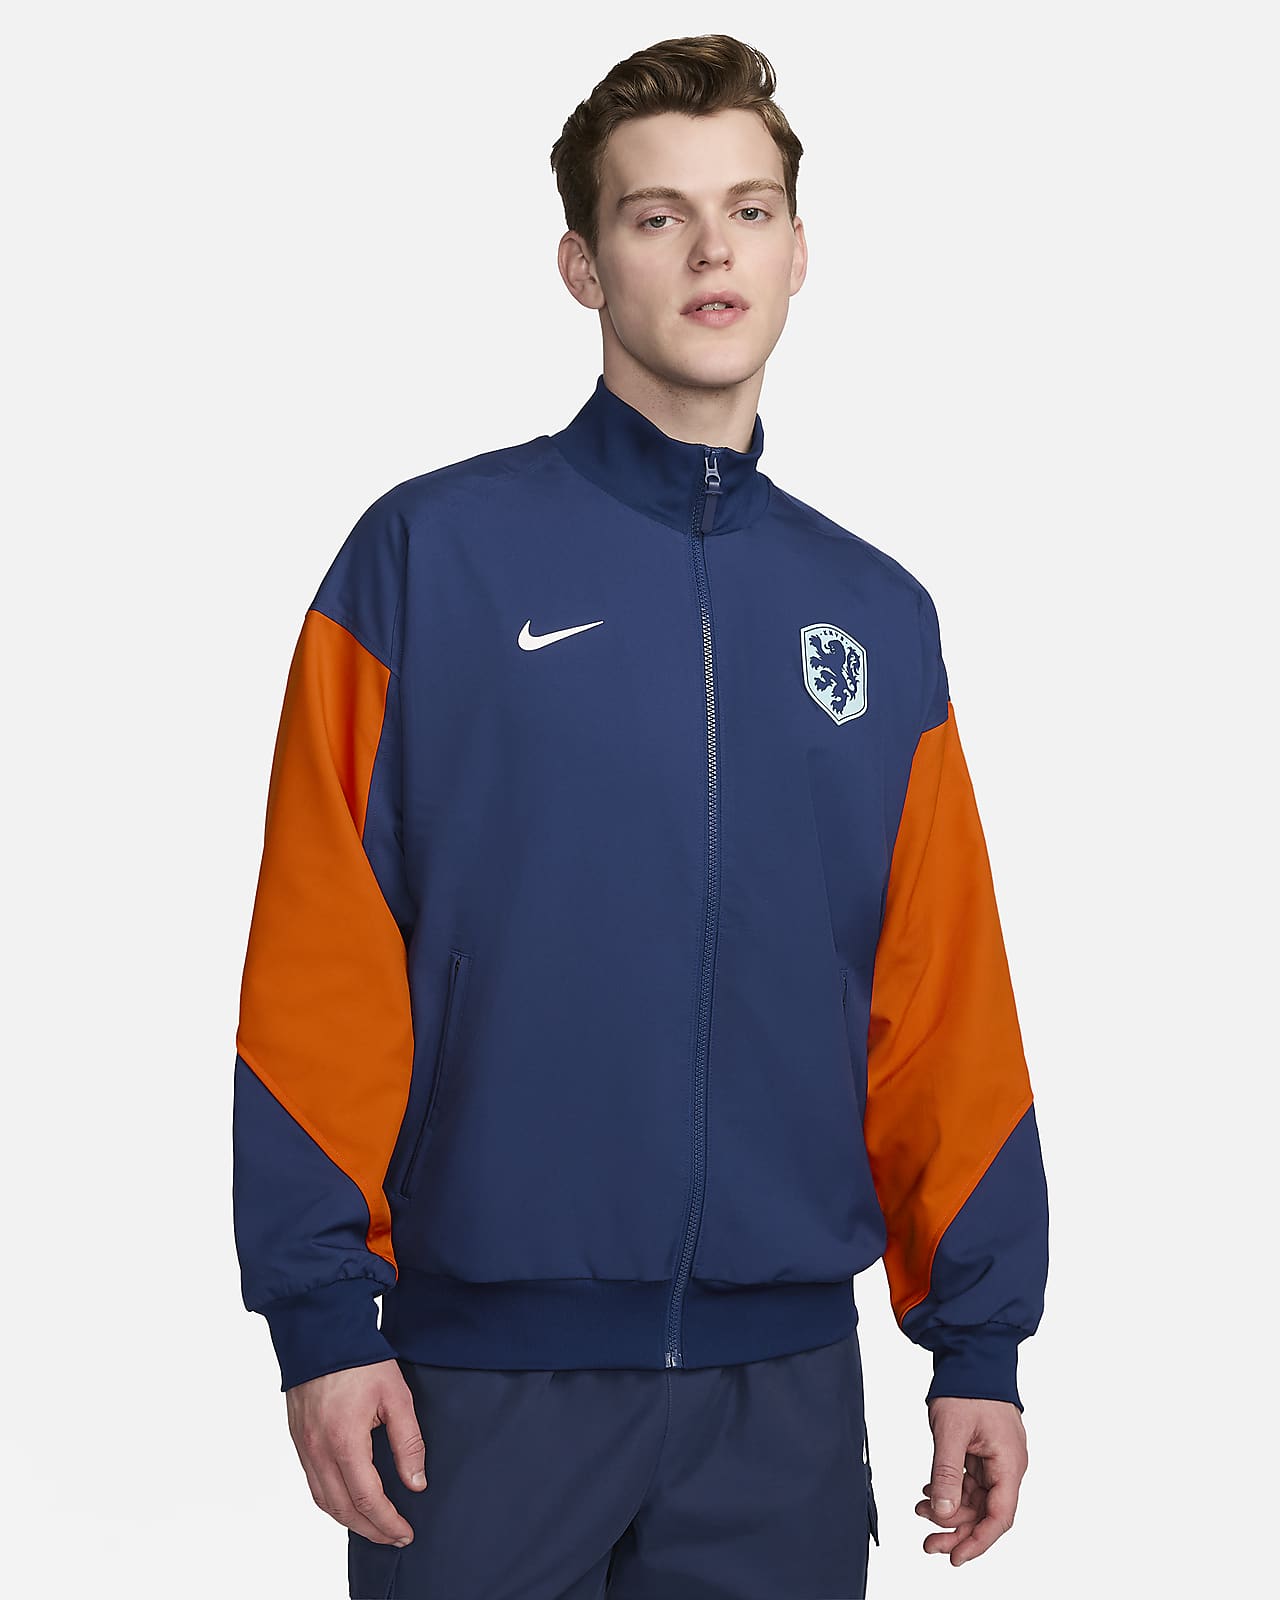 Hollandia Strike Nike Dri-FIT férfi futballkabát